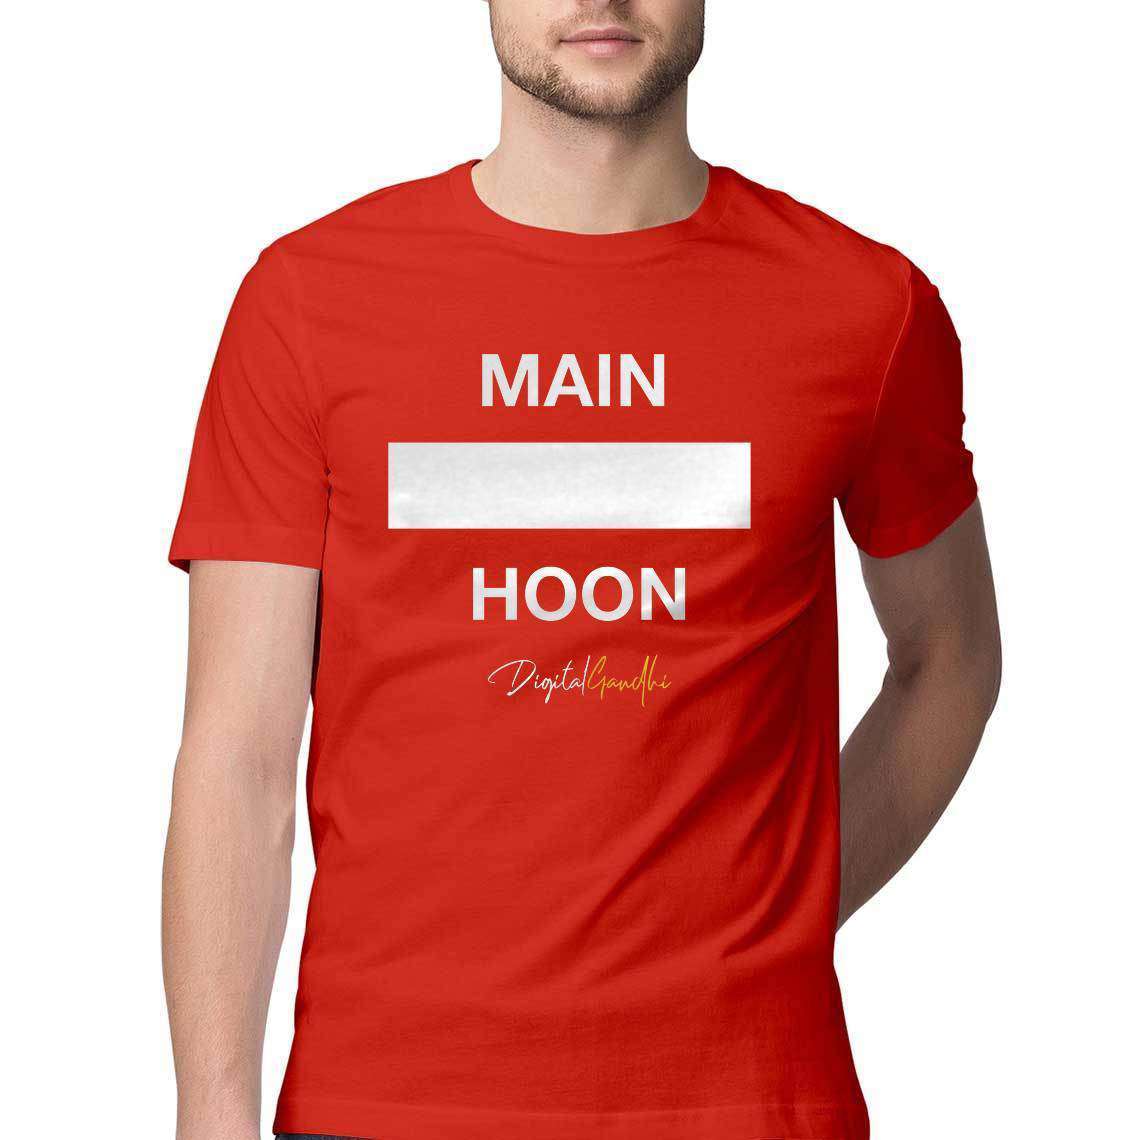 Main Hoon T Shirt by Digital Gandhi - Good Network by Digital Gandhi Digital Gandhi ,